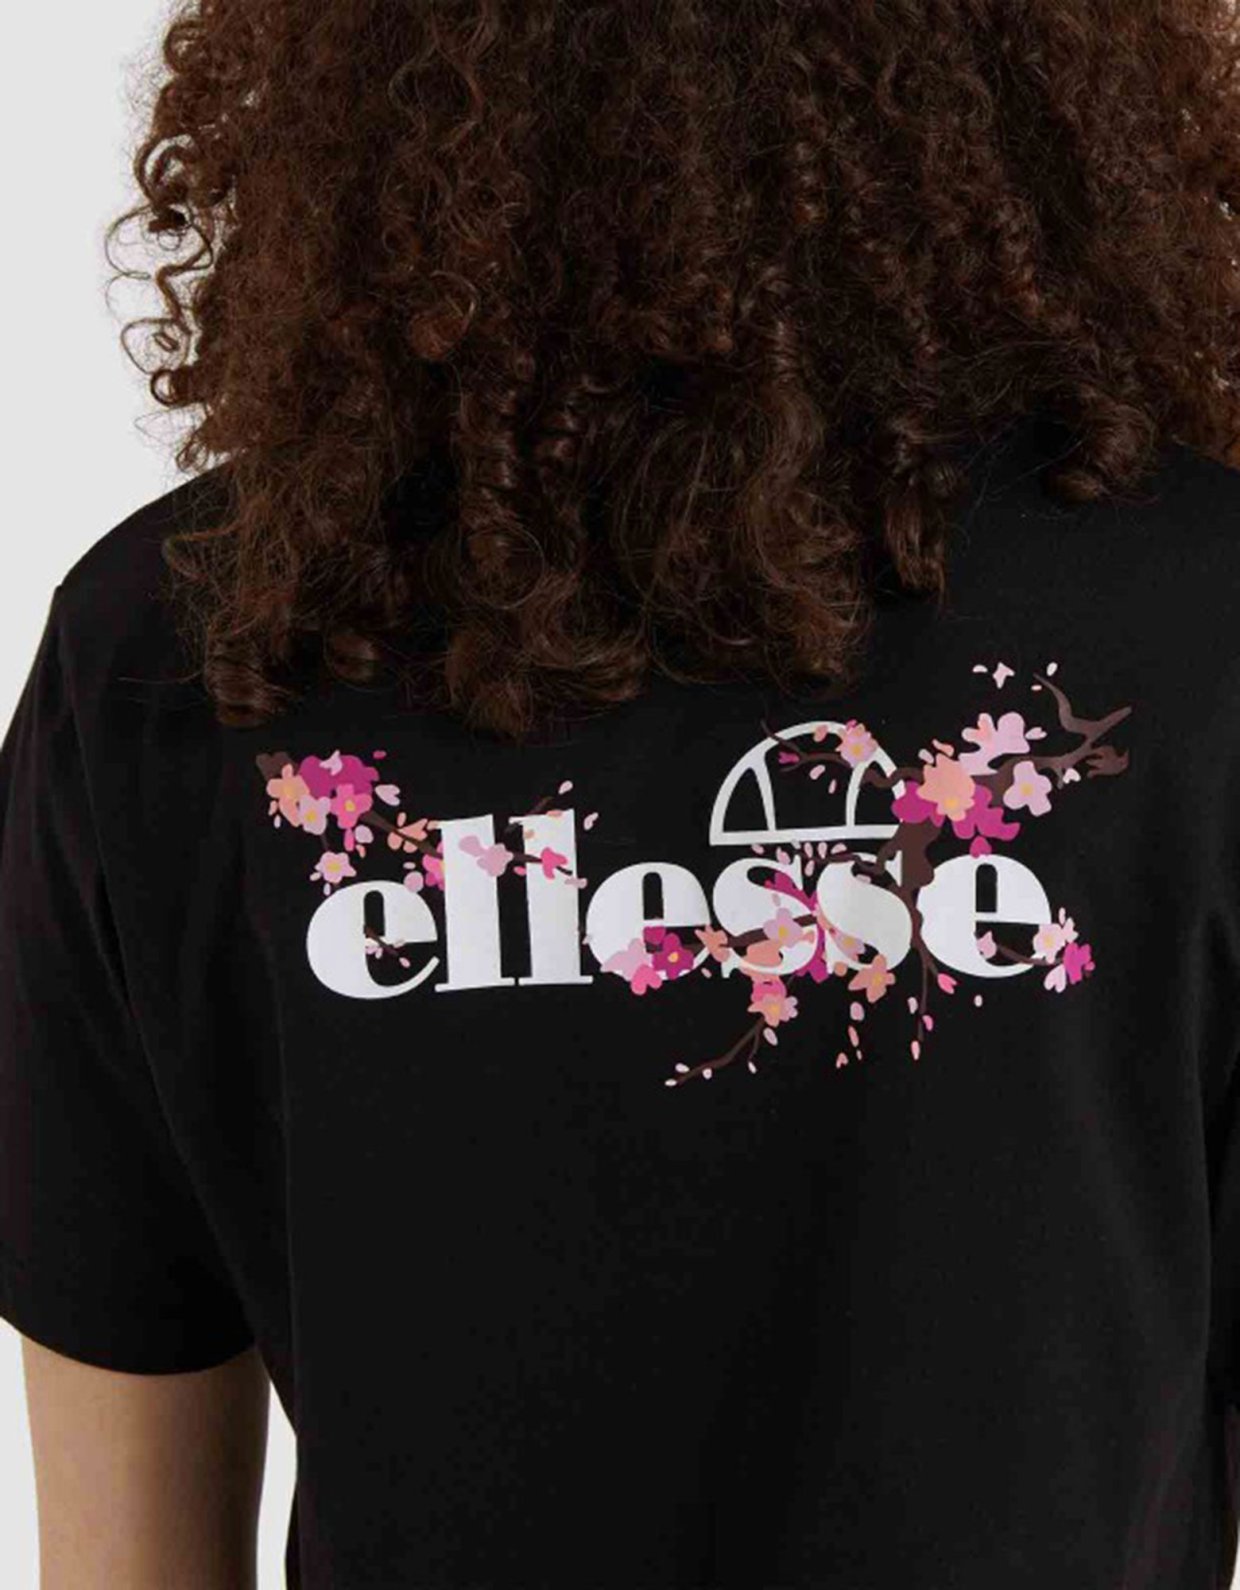 Ellesse Claudine  crop t-shirt black